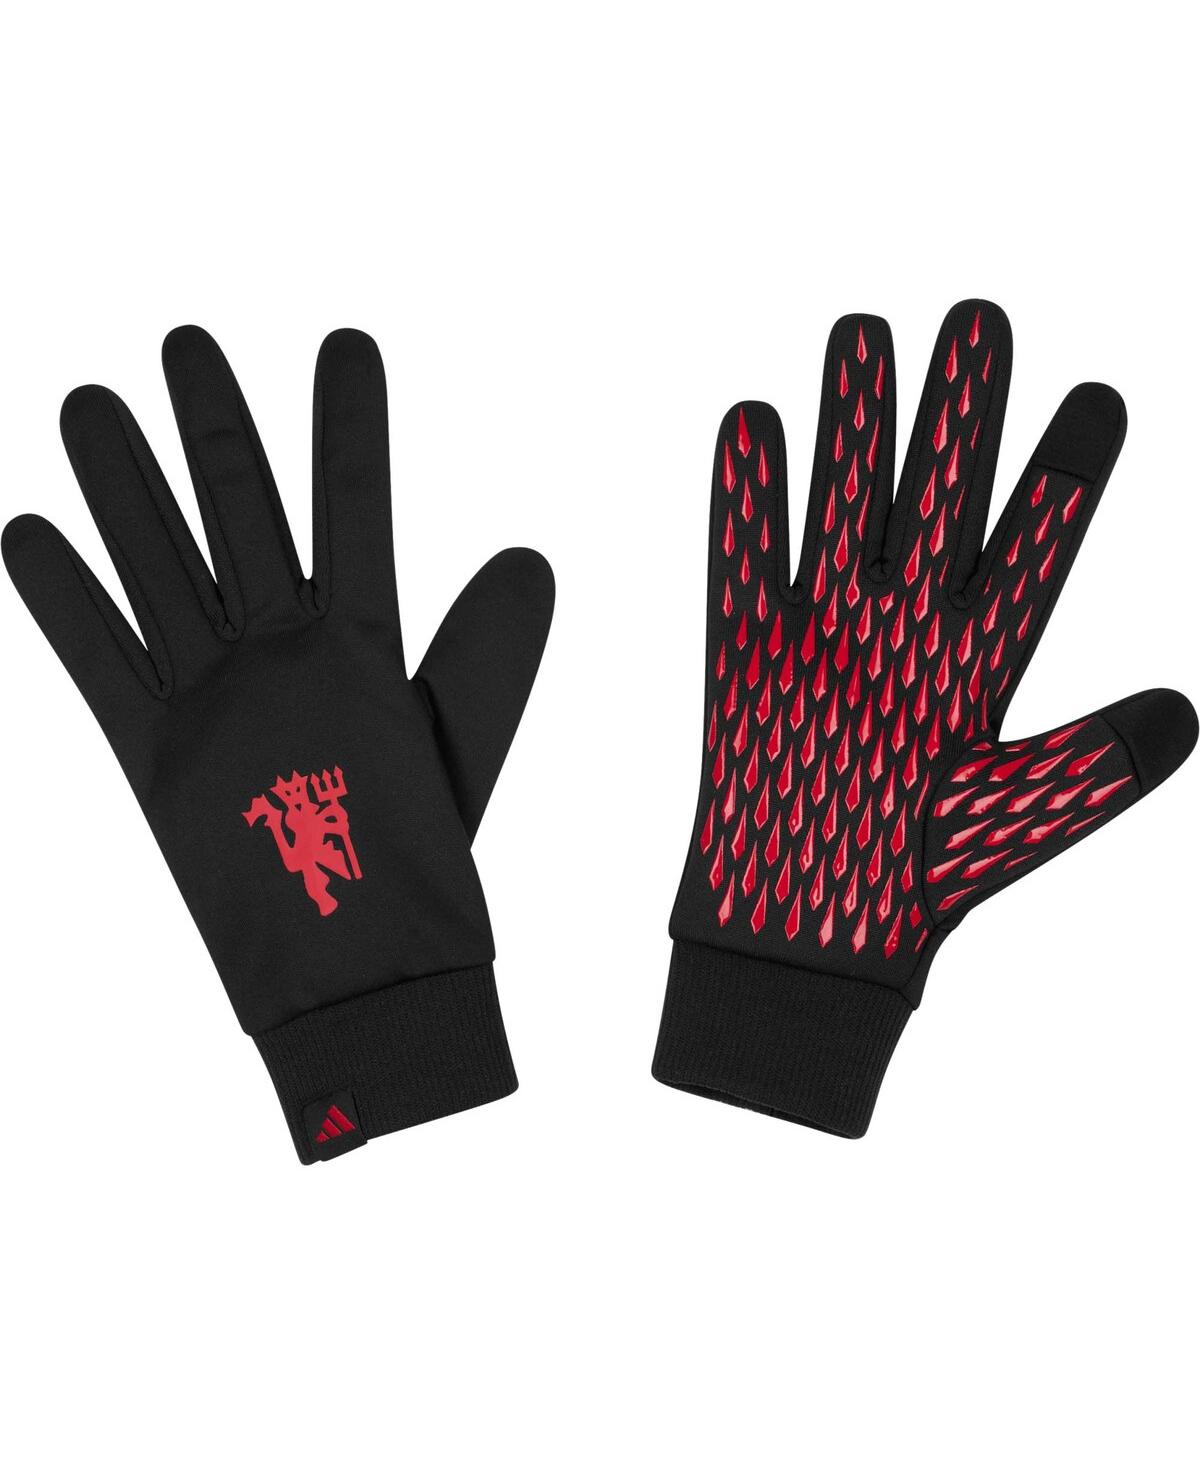 Manchester United Player Gloves - Black